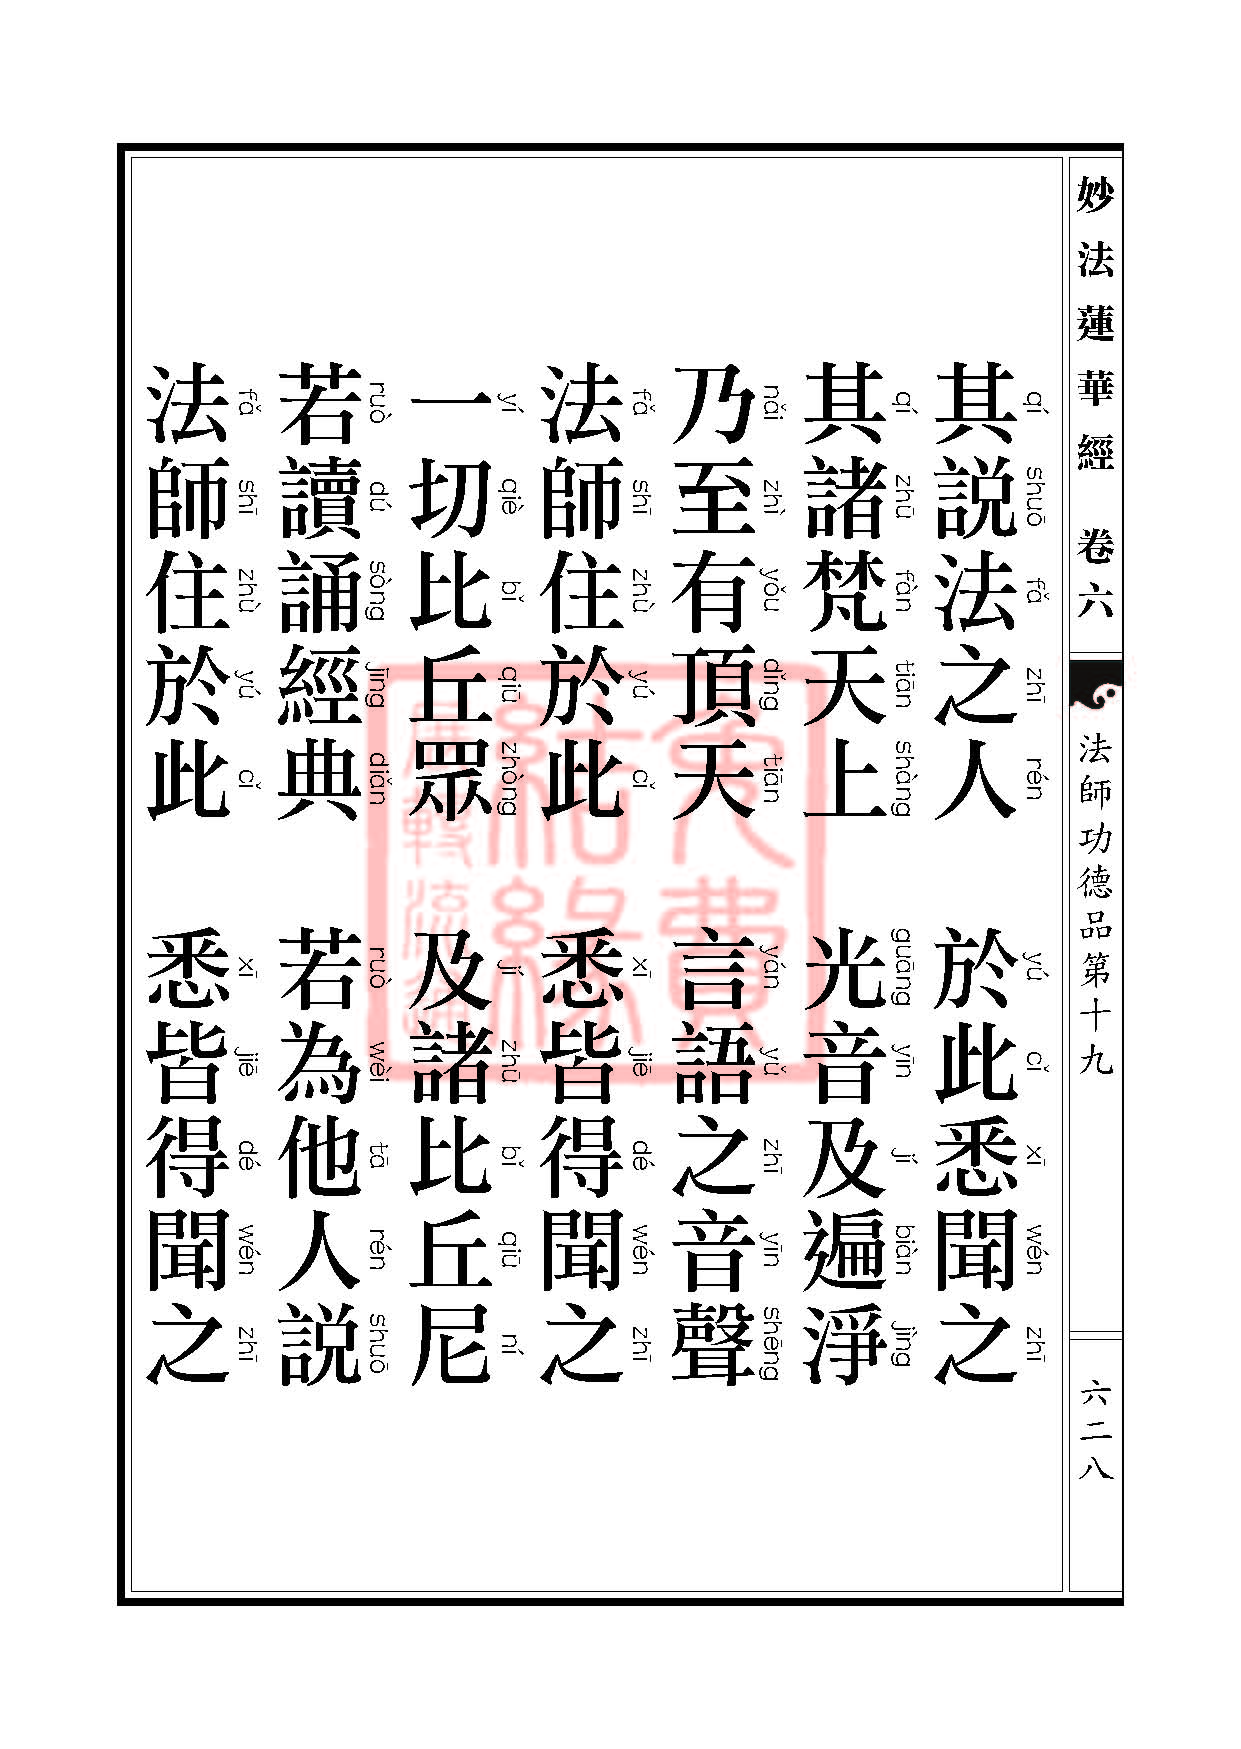 Book_FHJ_HK-A6-PY_Web_ҳ_628.jpg